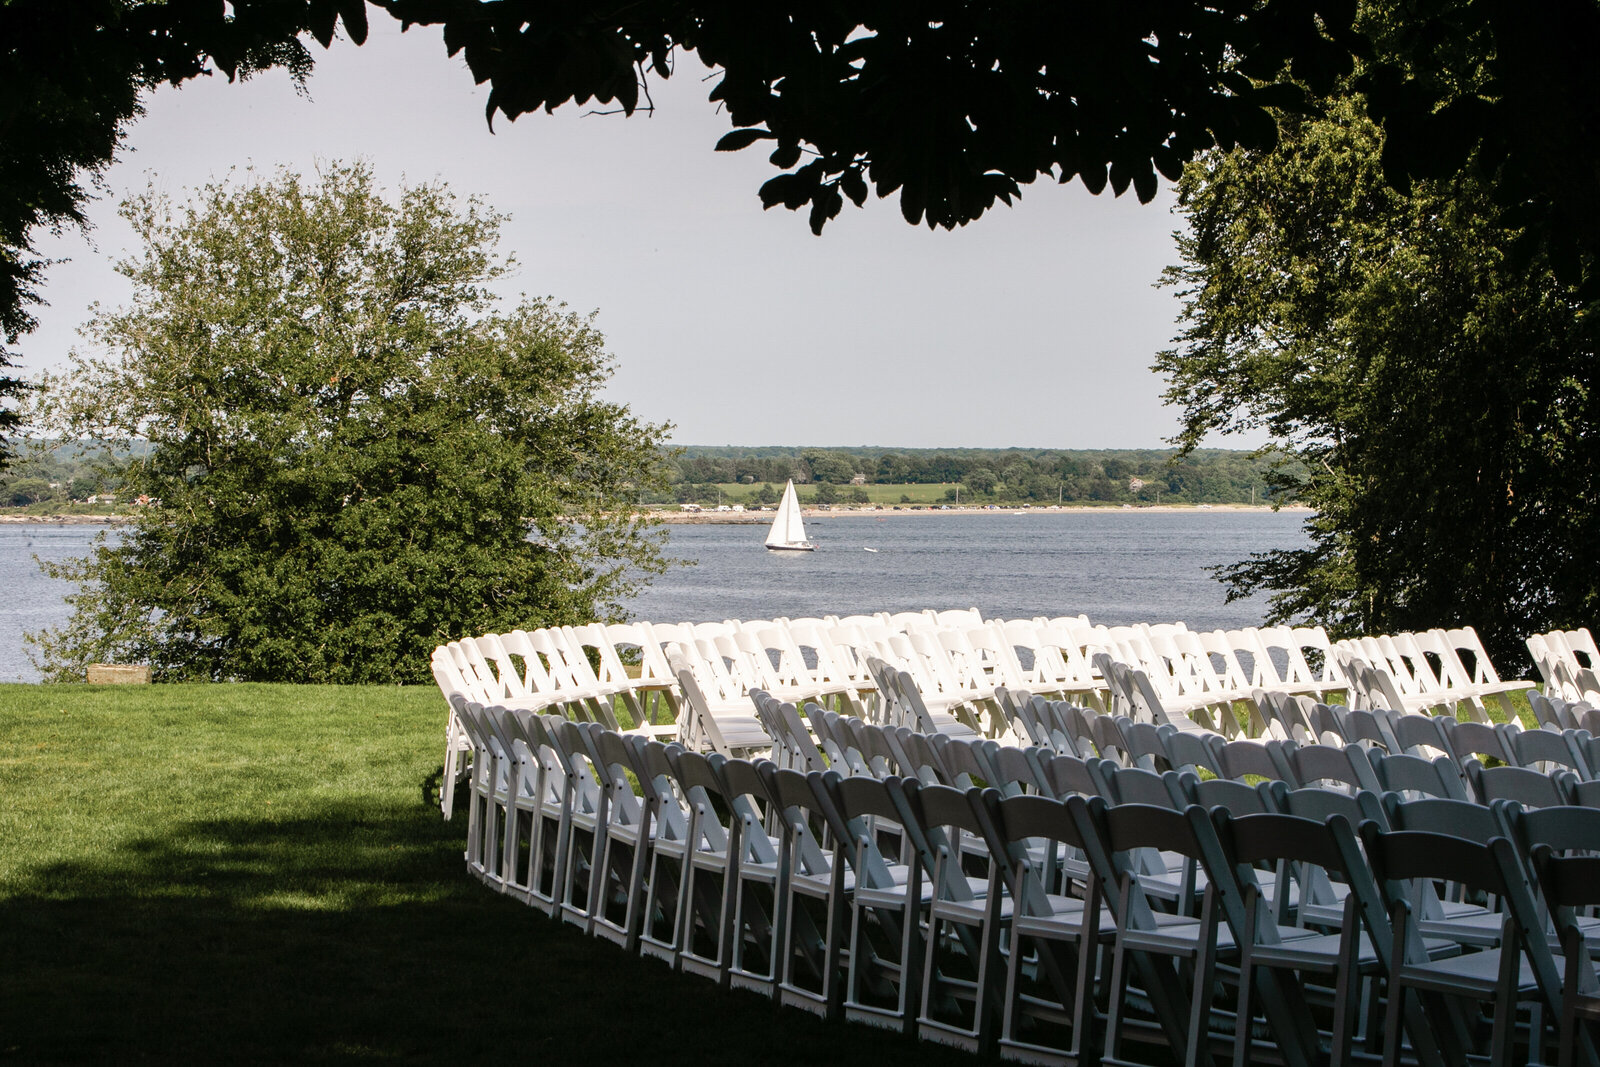 New-England-Wedding-Photographer-Sabrina-Scolari-25